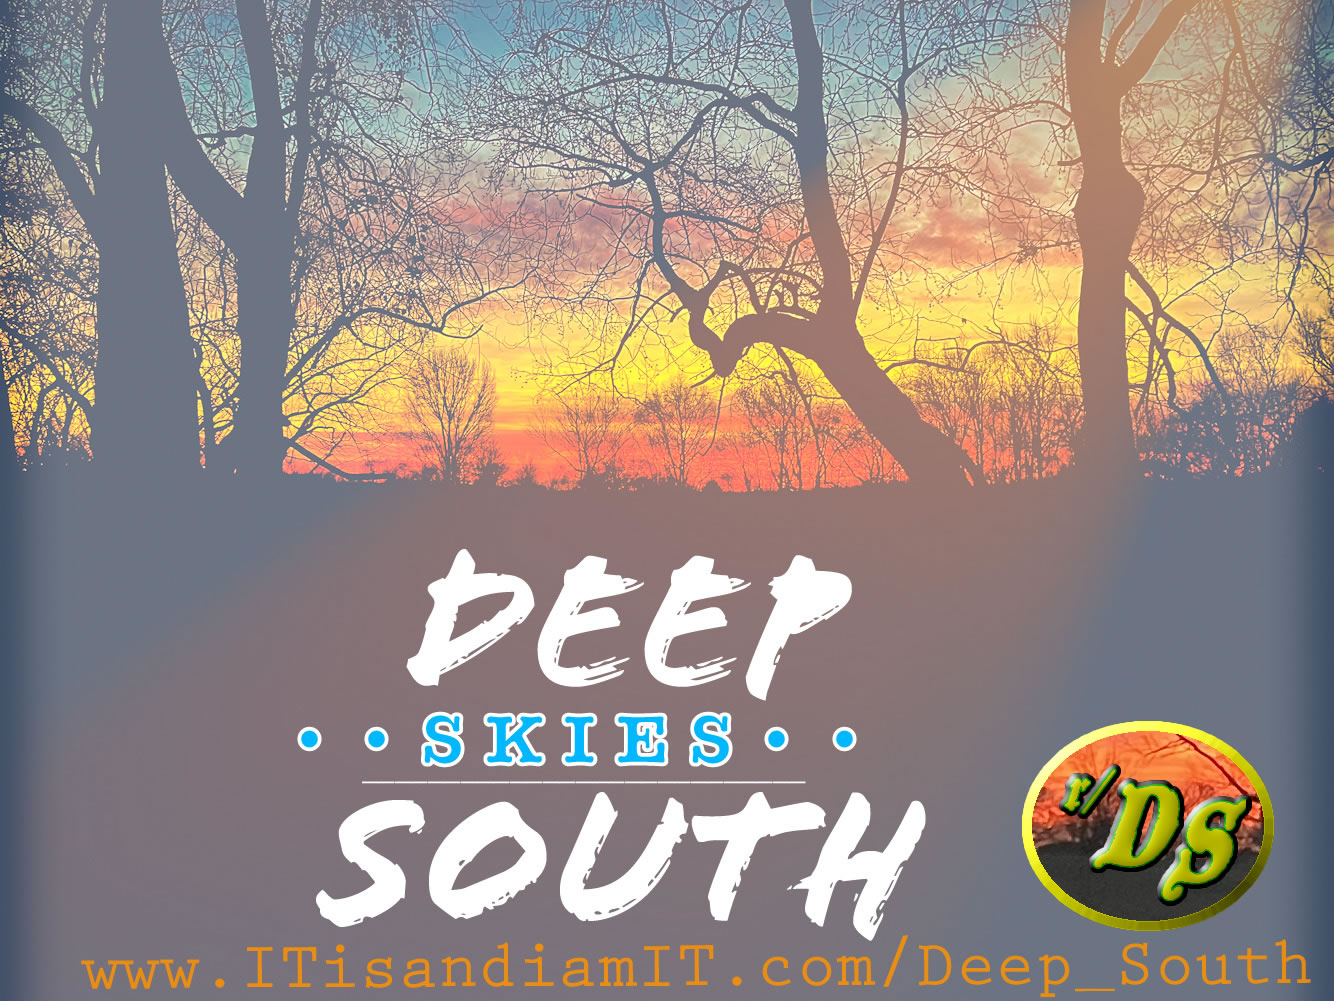 Deep_South Images shared on Docs Reddit Community r/Deep_South